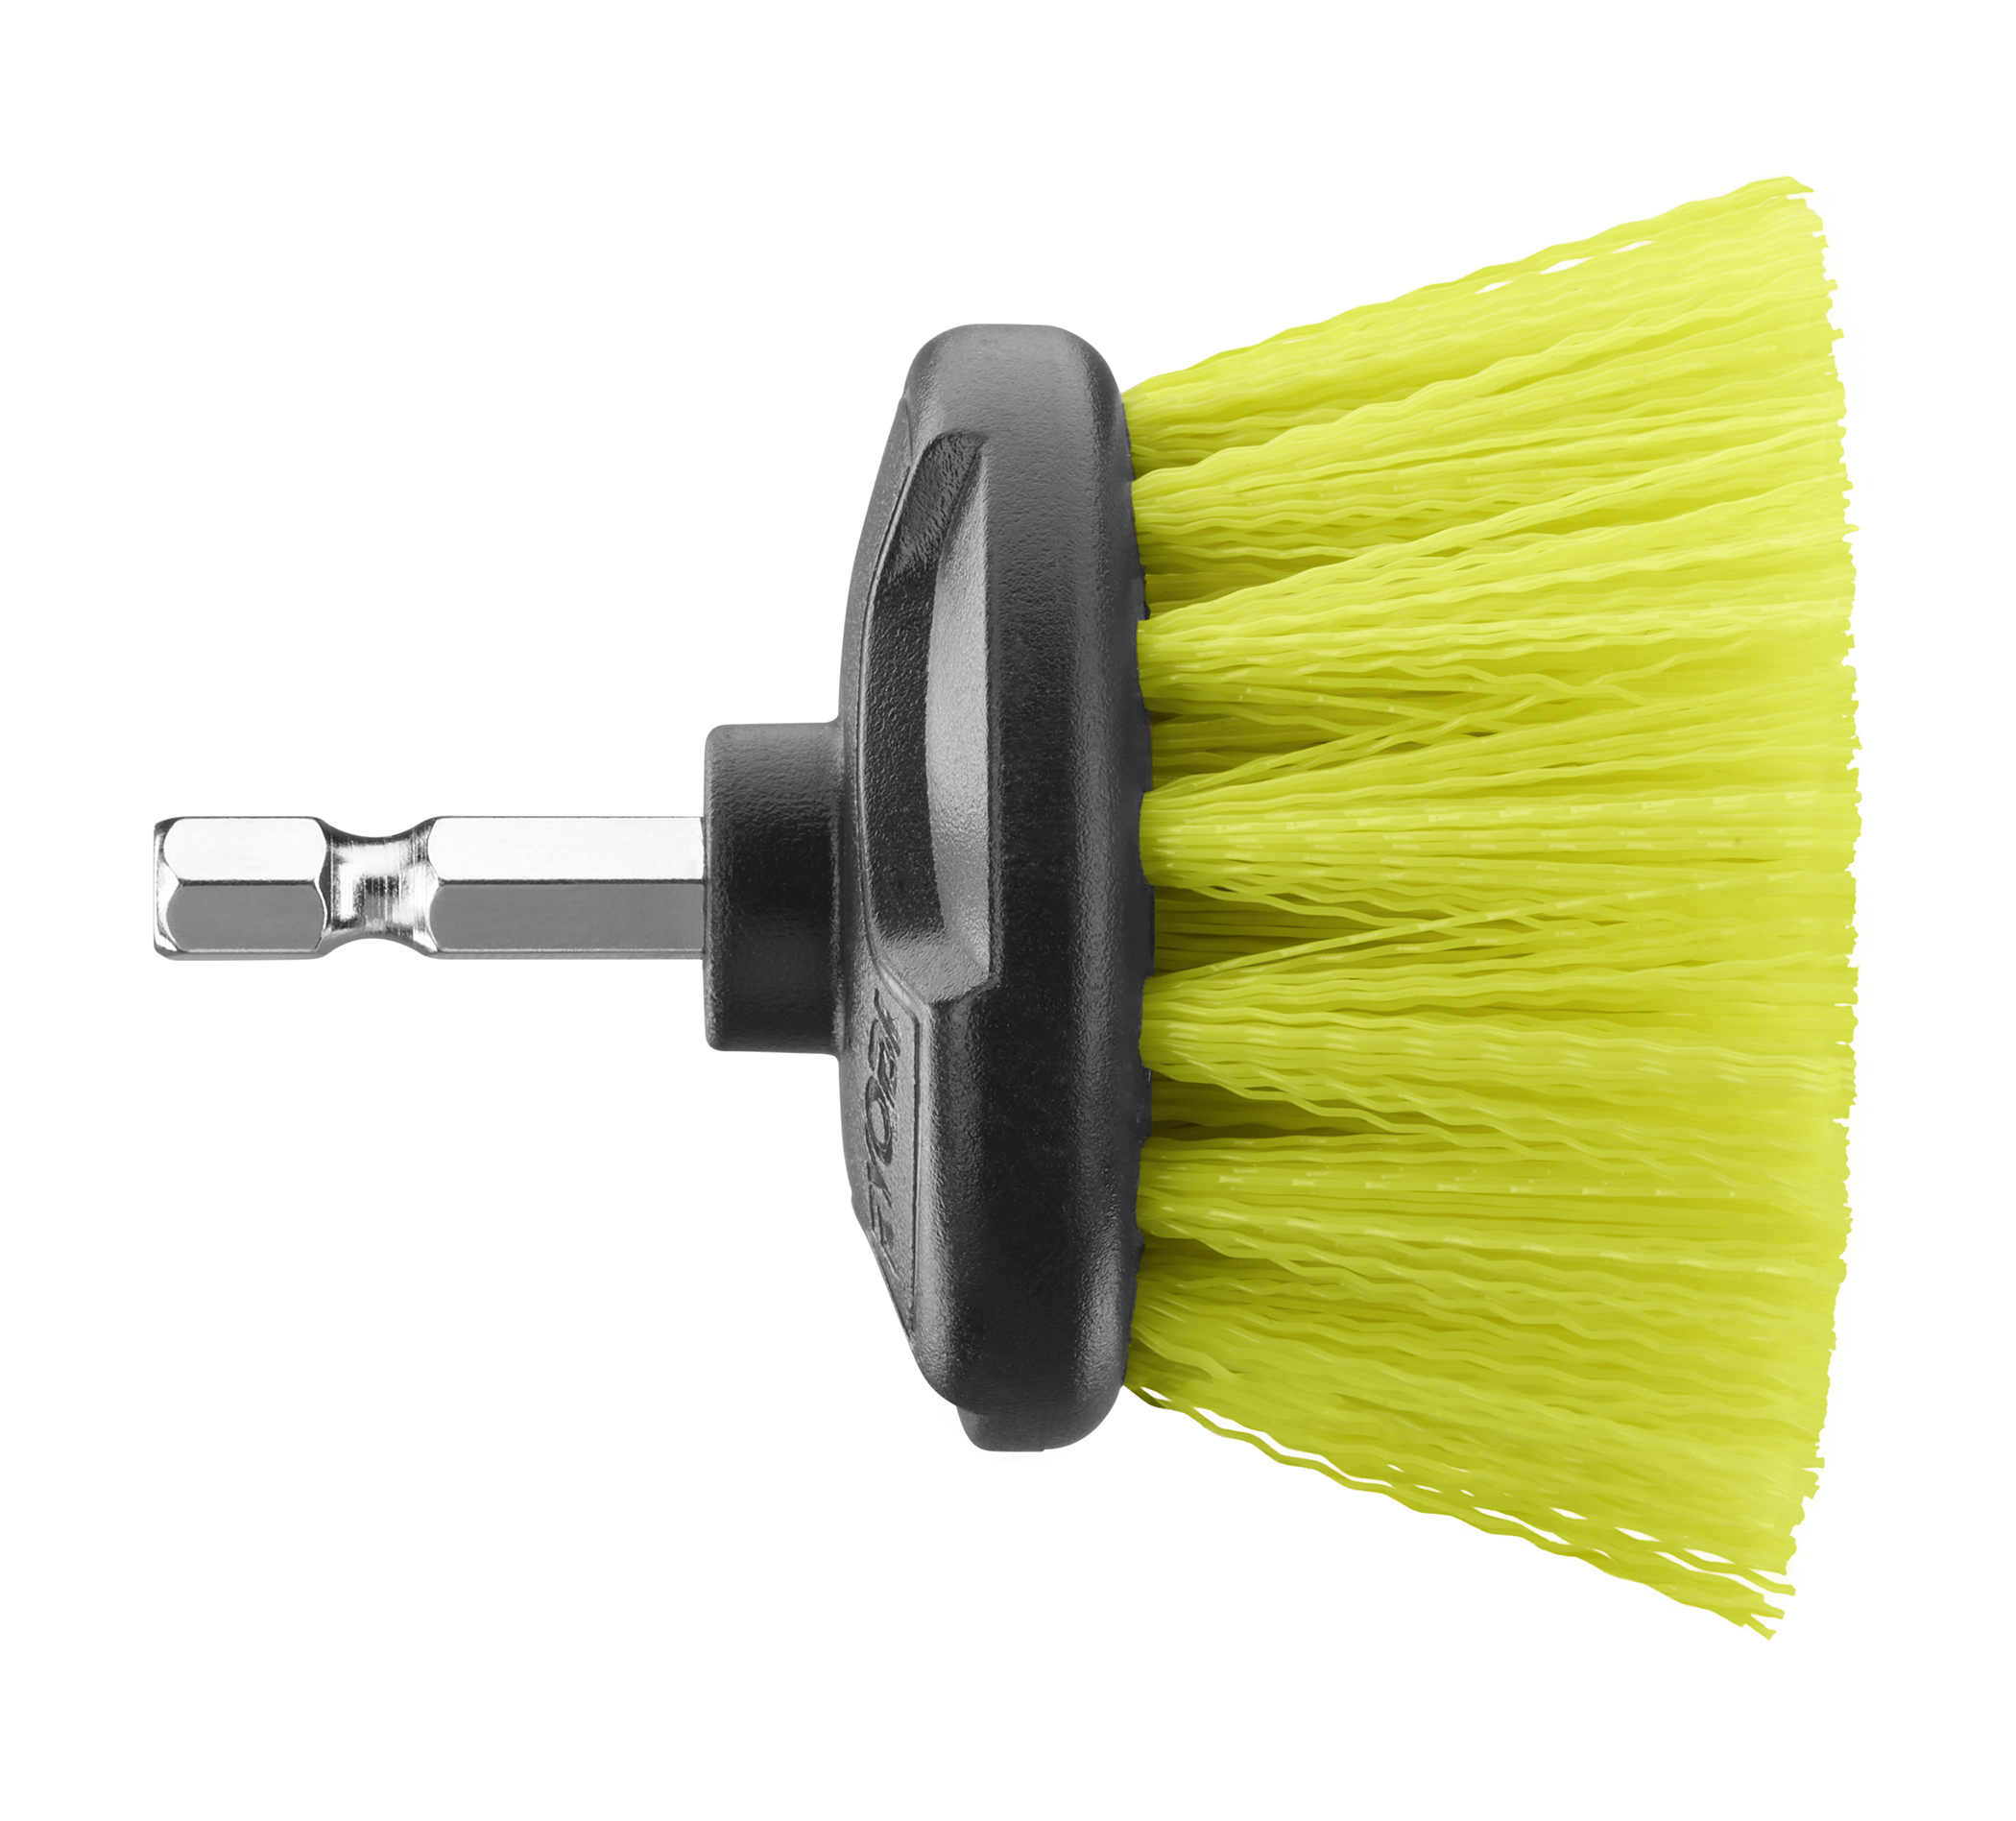 2 PC. Medium Bristle Brush Cleaning Accessory Kit | RYOBI Tools